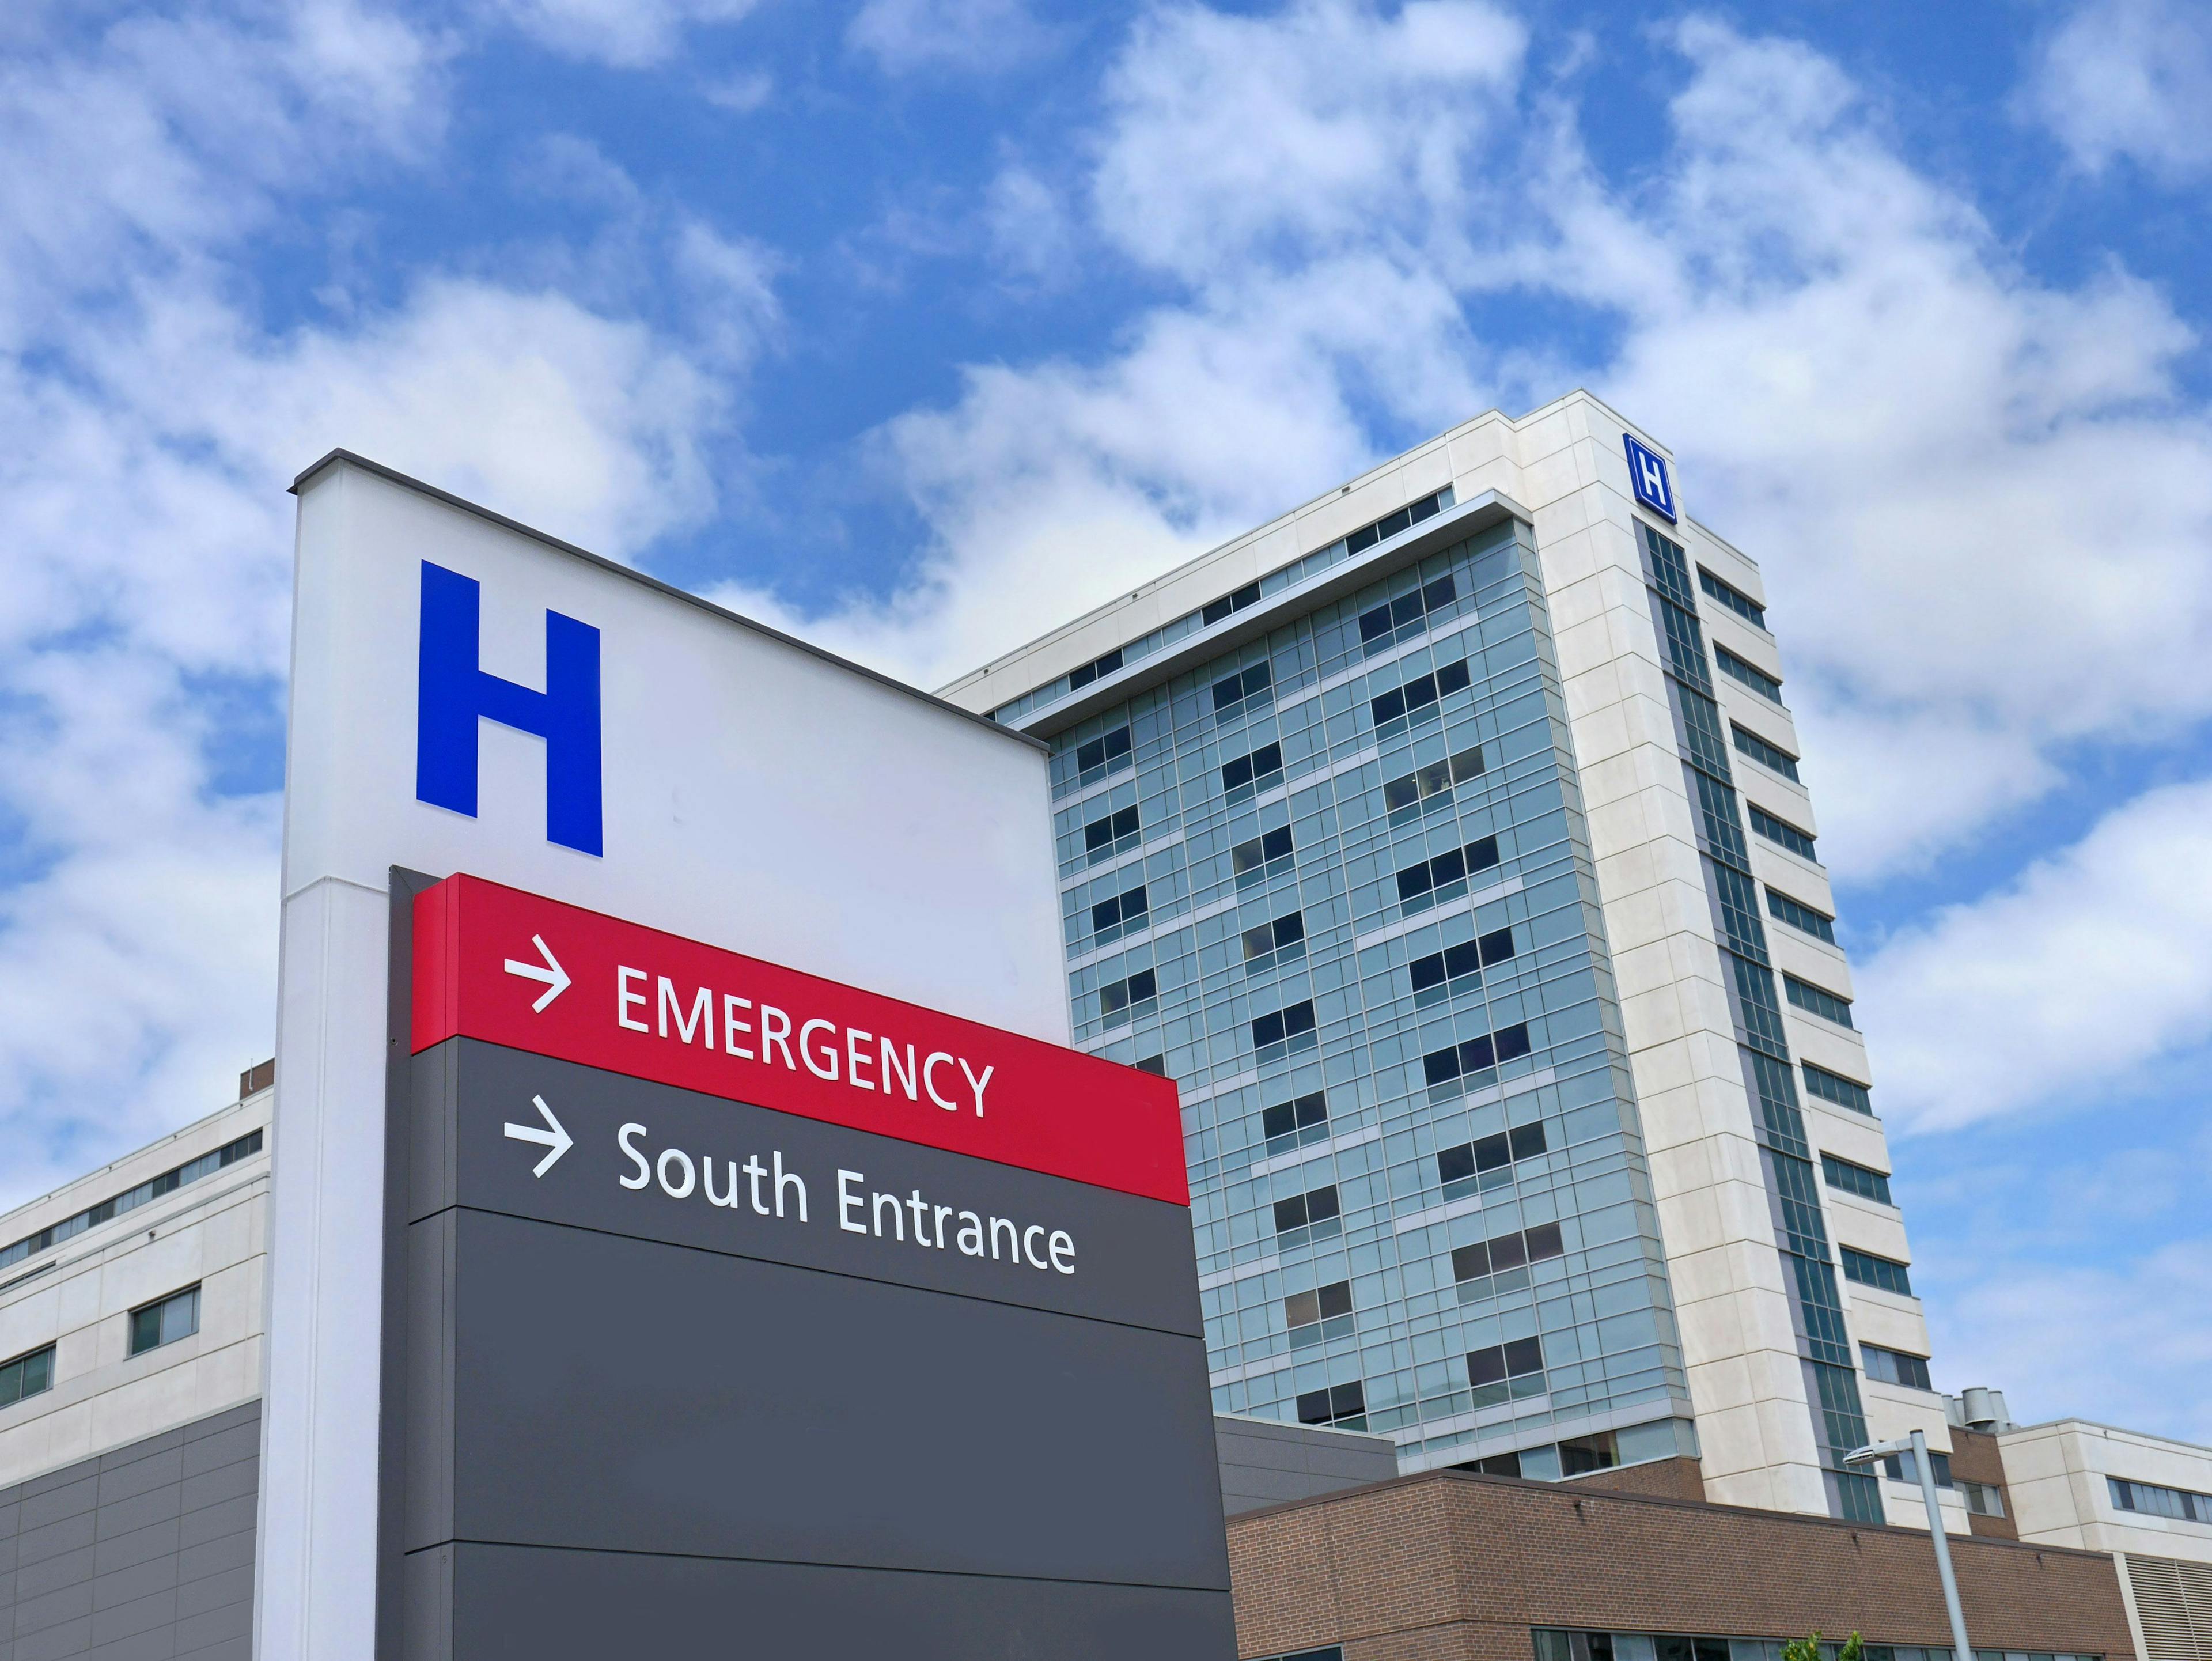 Hospital -- Image credit: Spiroview Inc. | stock.adobe.com